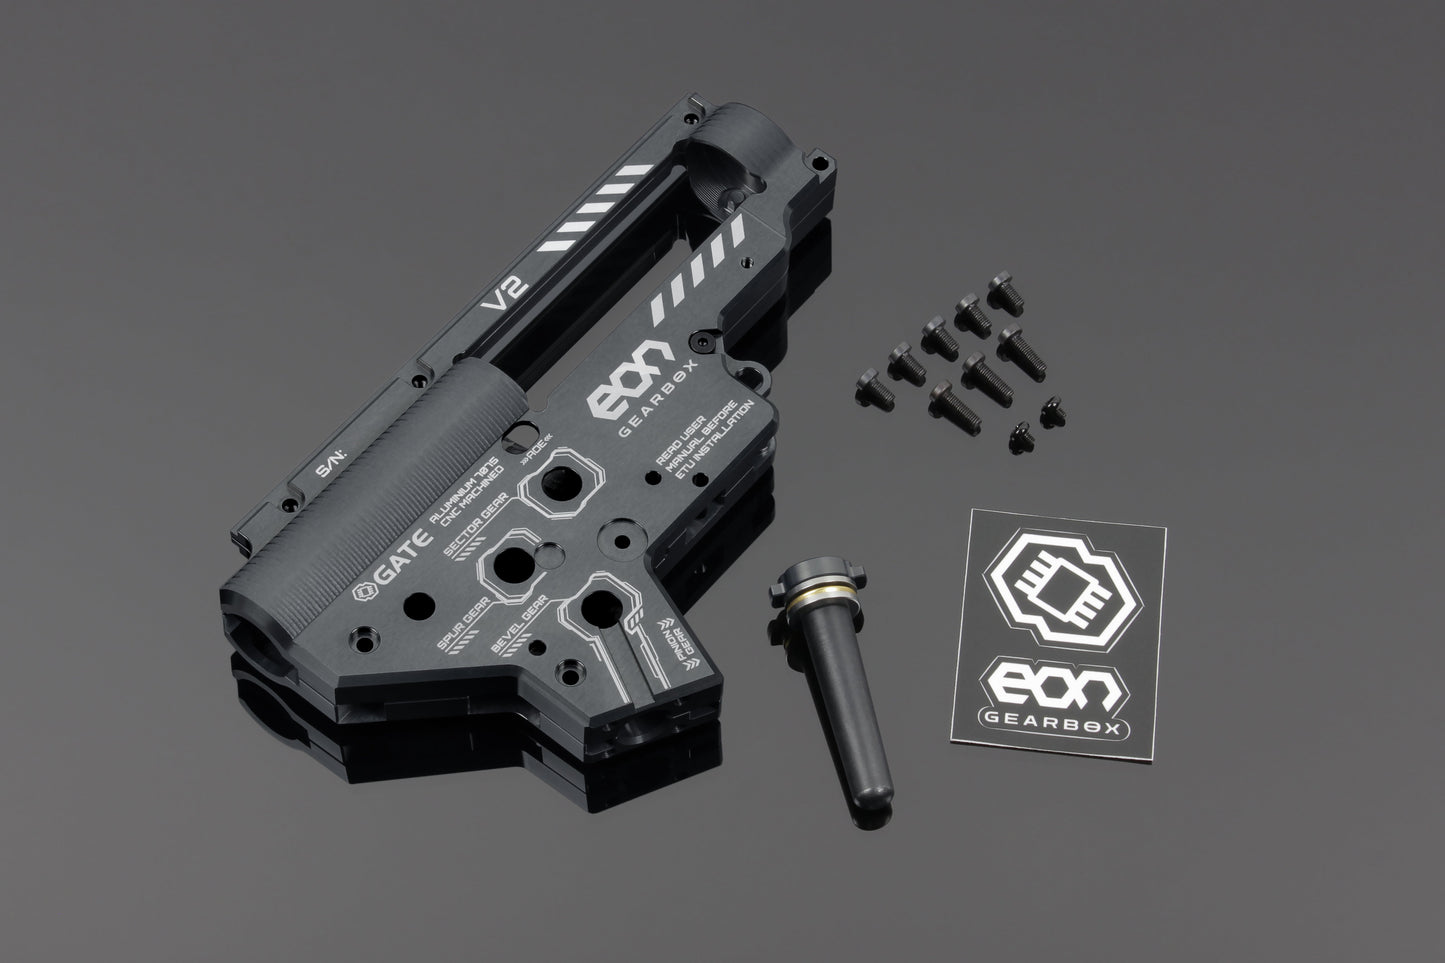 EON V2 Gearbox rev. 2 [CNC] - Titanium / Silver